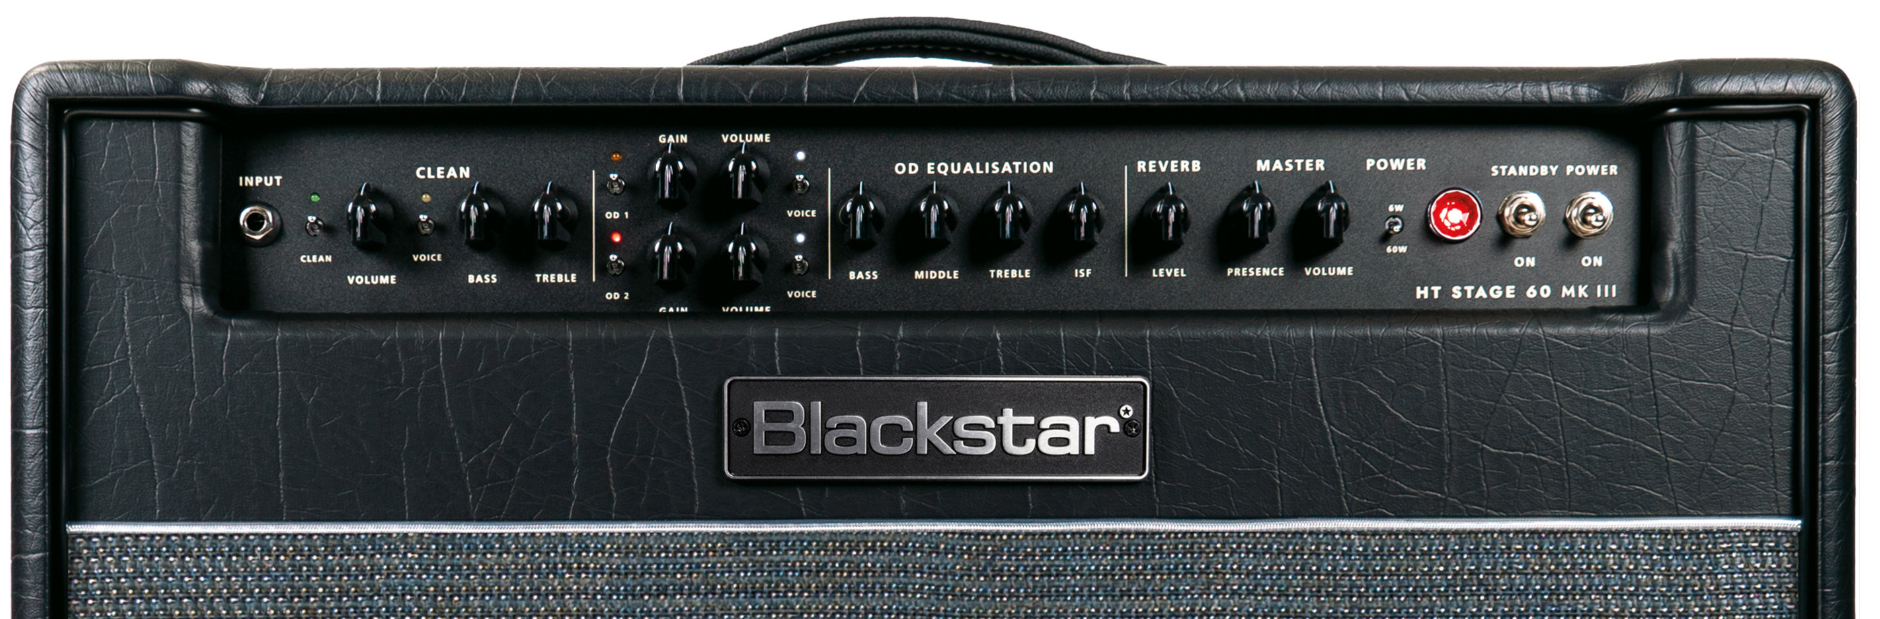 Blackstar Ht Venue Stage 60 112 Mkiii 60w 1x12 El34 - Combo für E-Gitarre - Variation 3